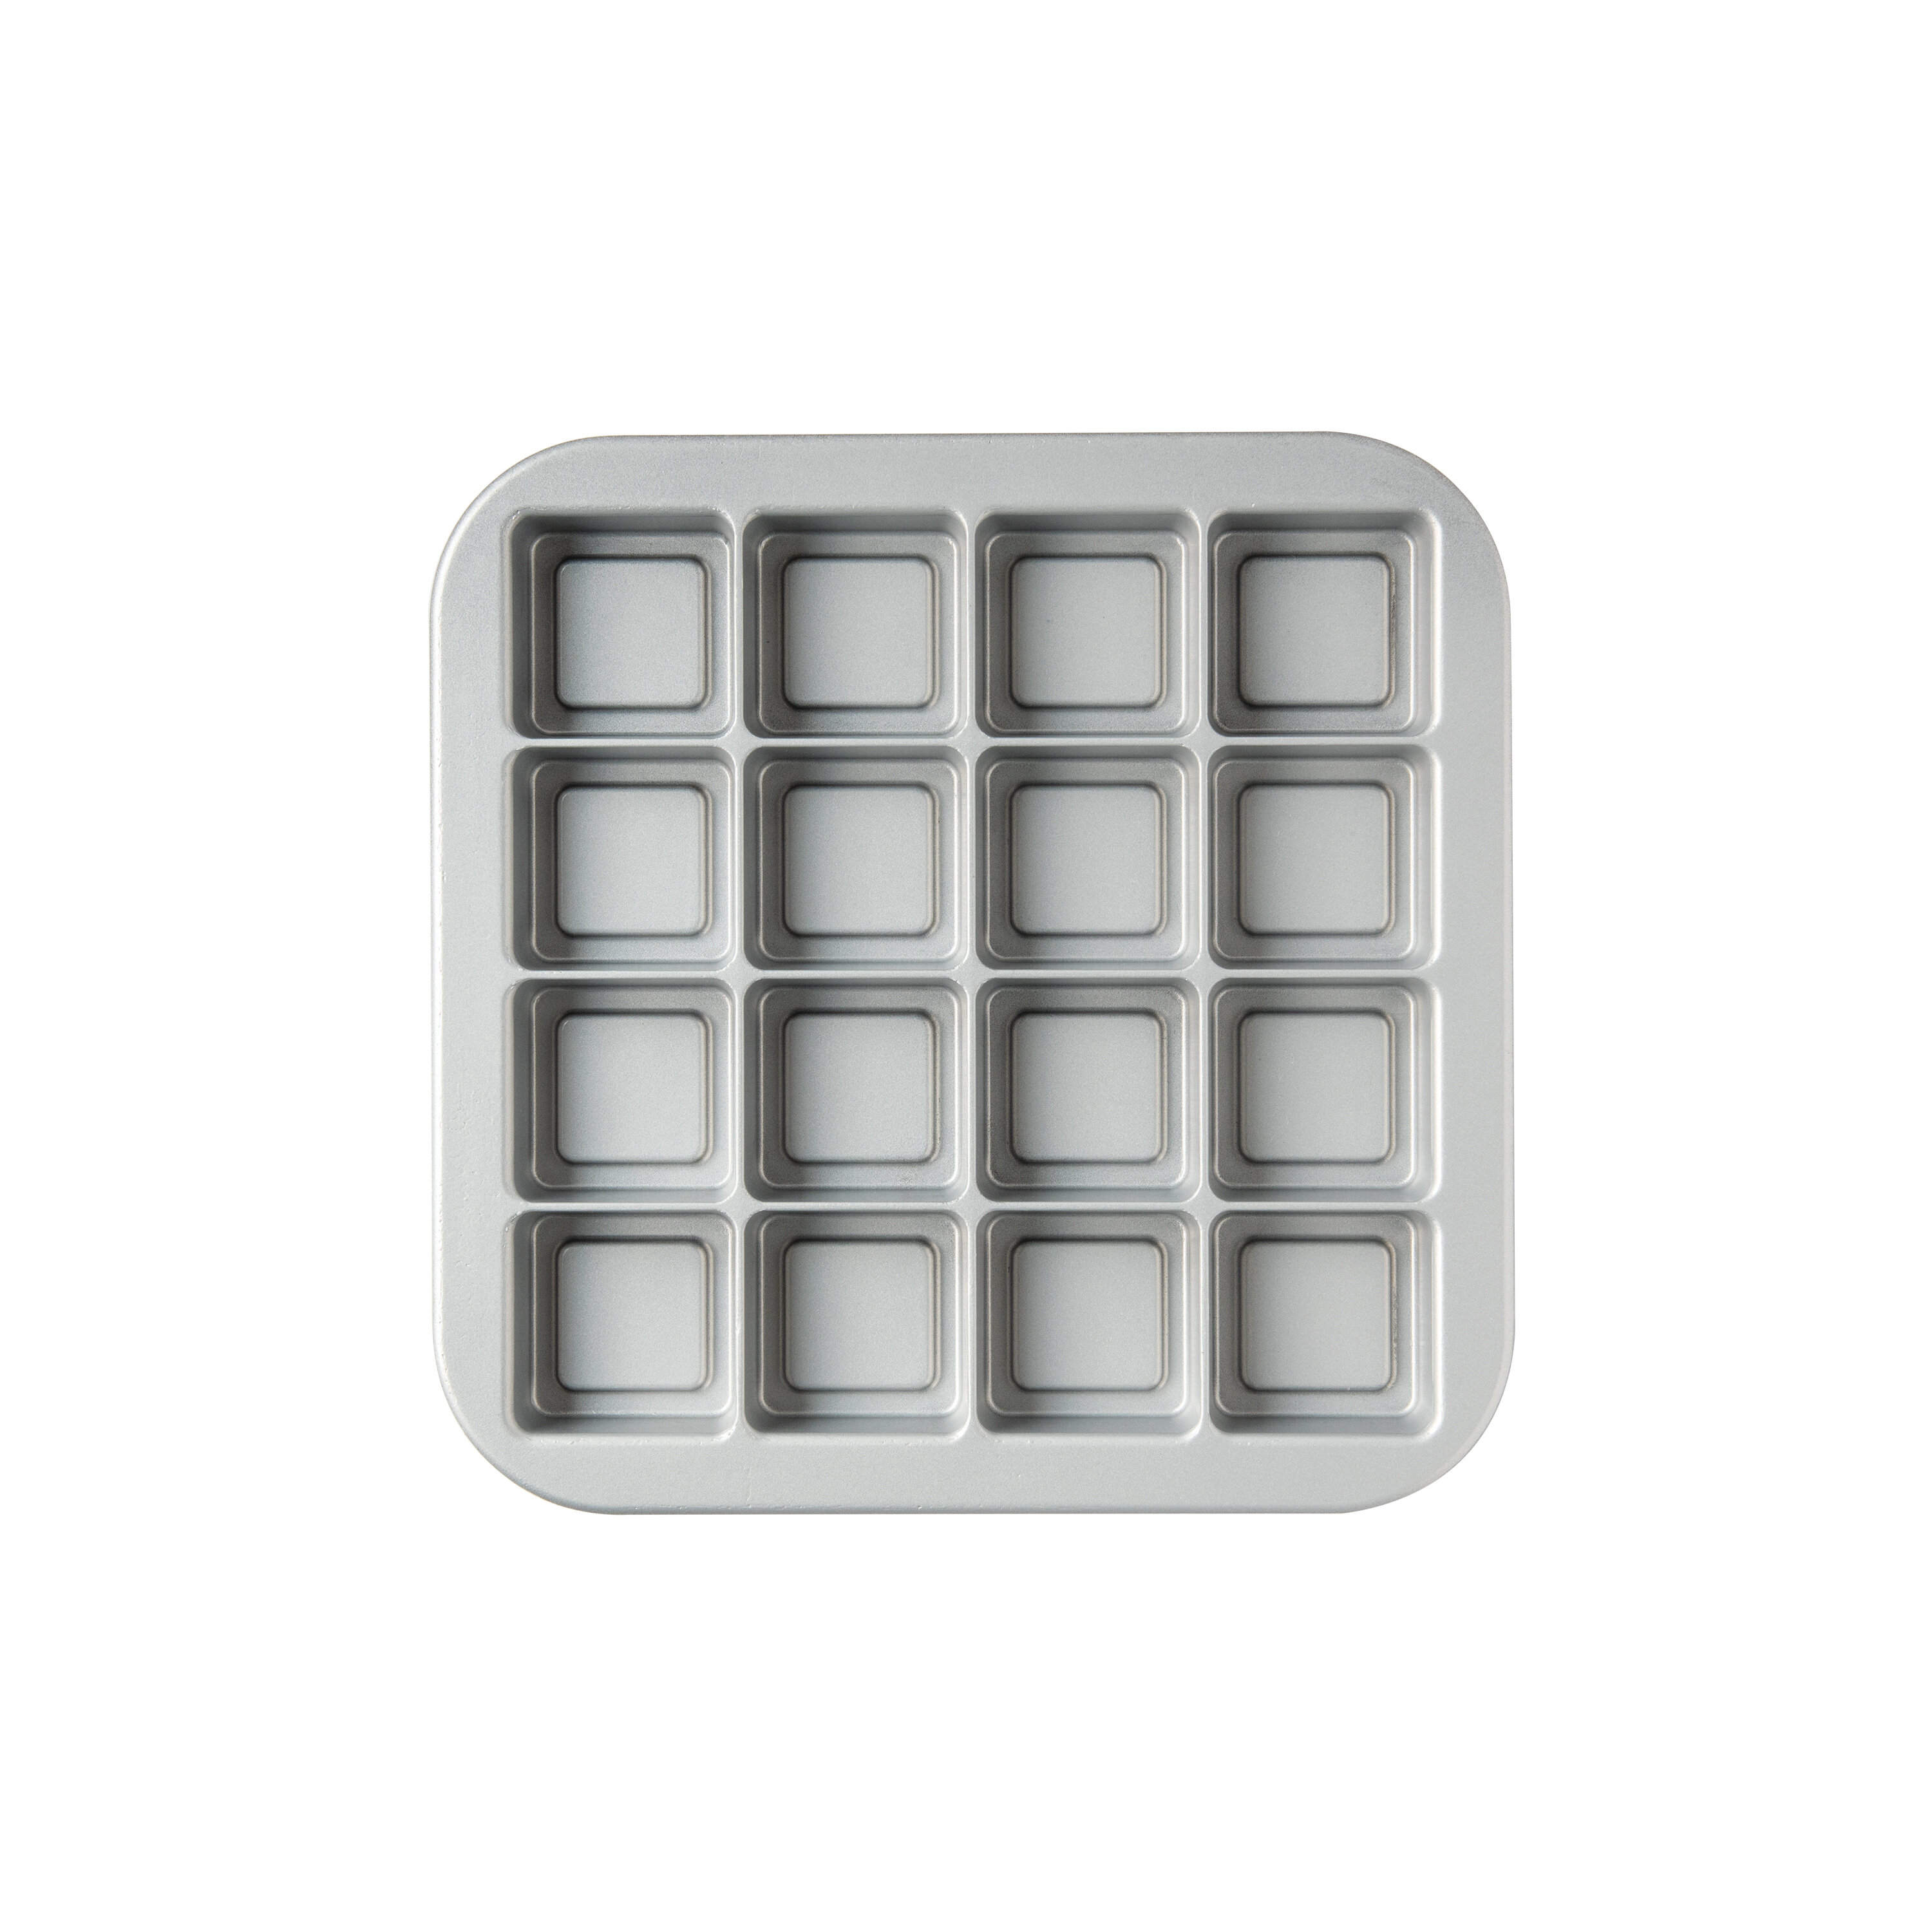 Nordic Ware Bundt Brownie Baking Pan Cast Aluminum Makes 12